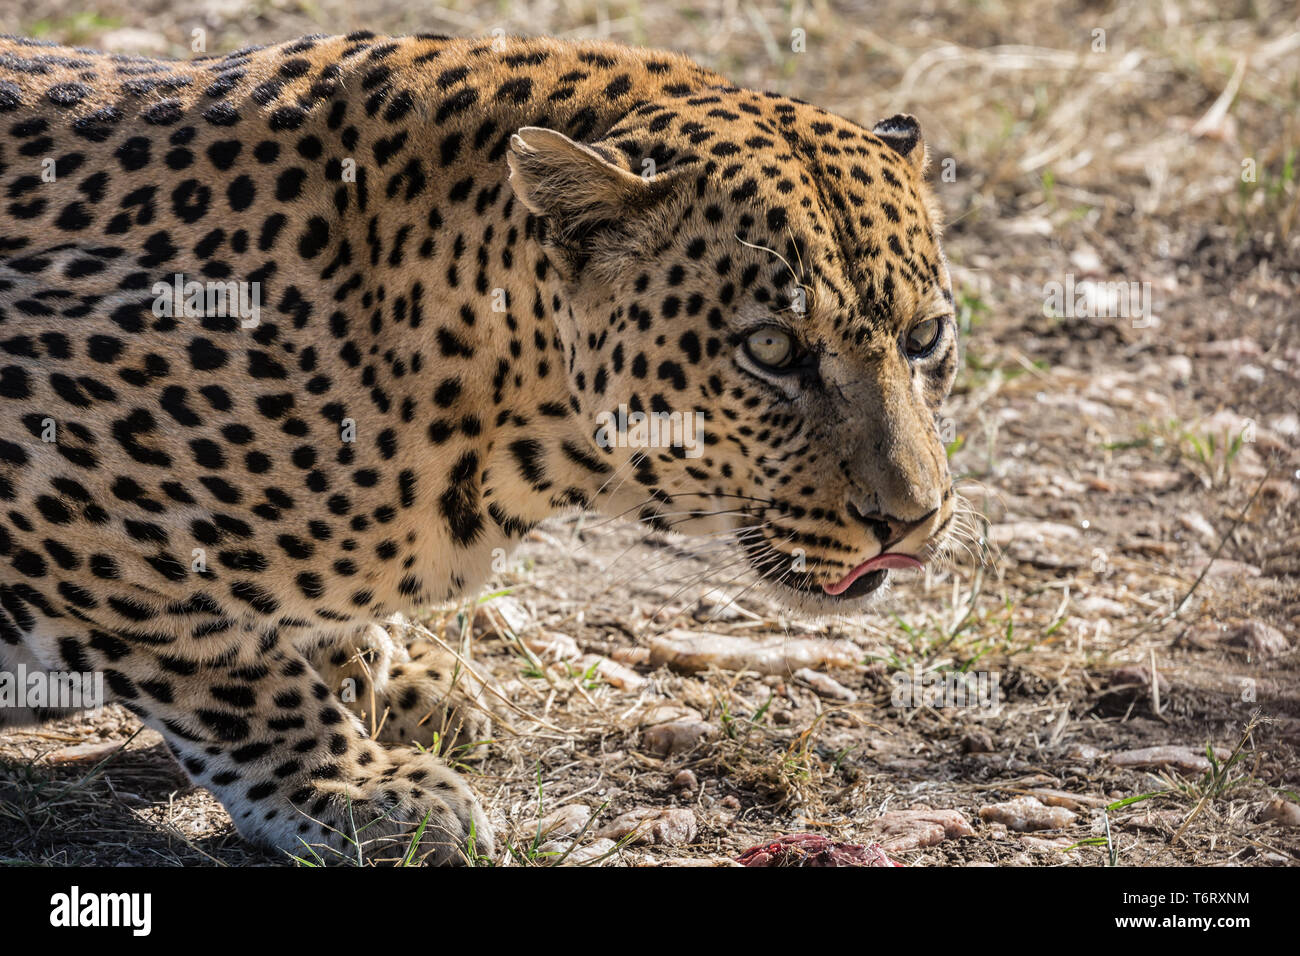 African predator in the wild savannah Stock Photo